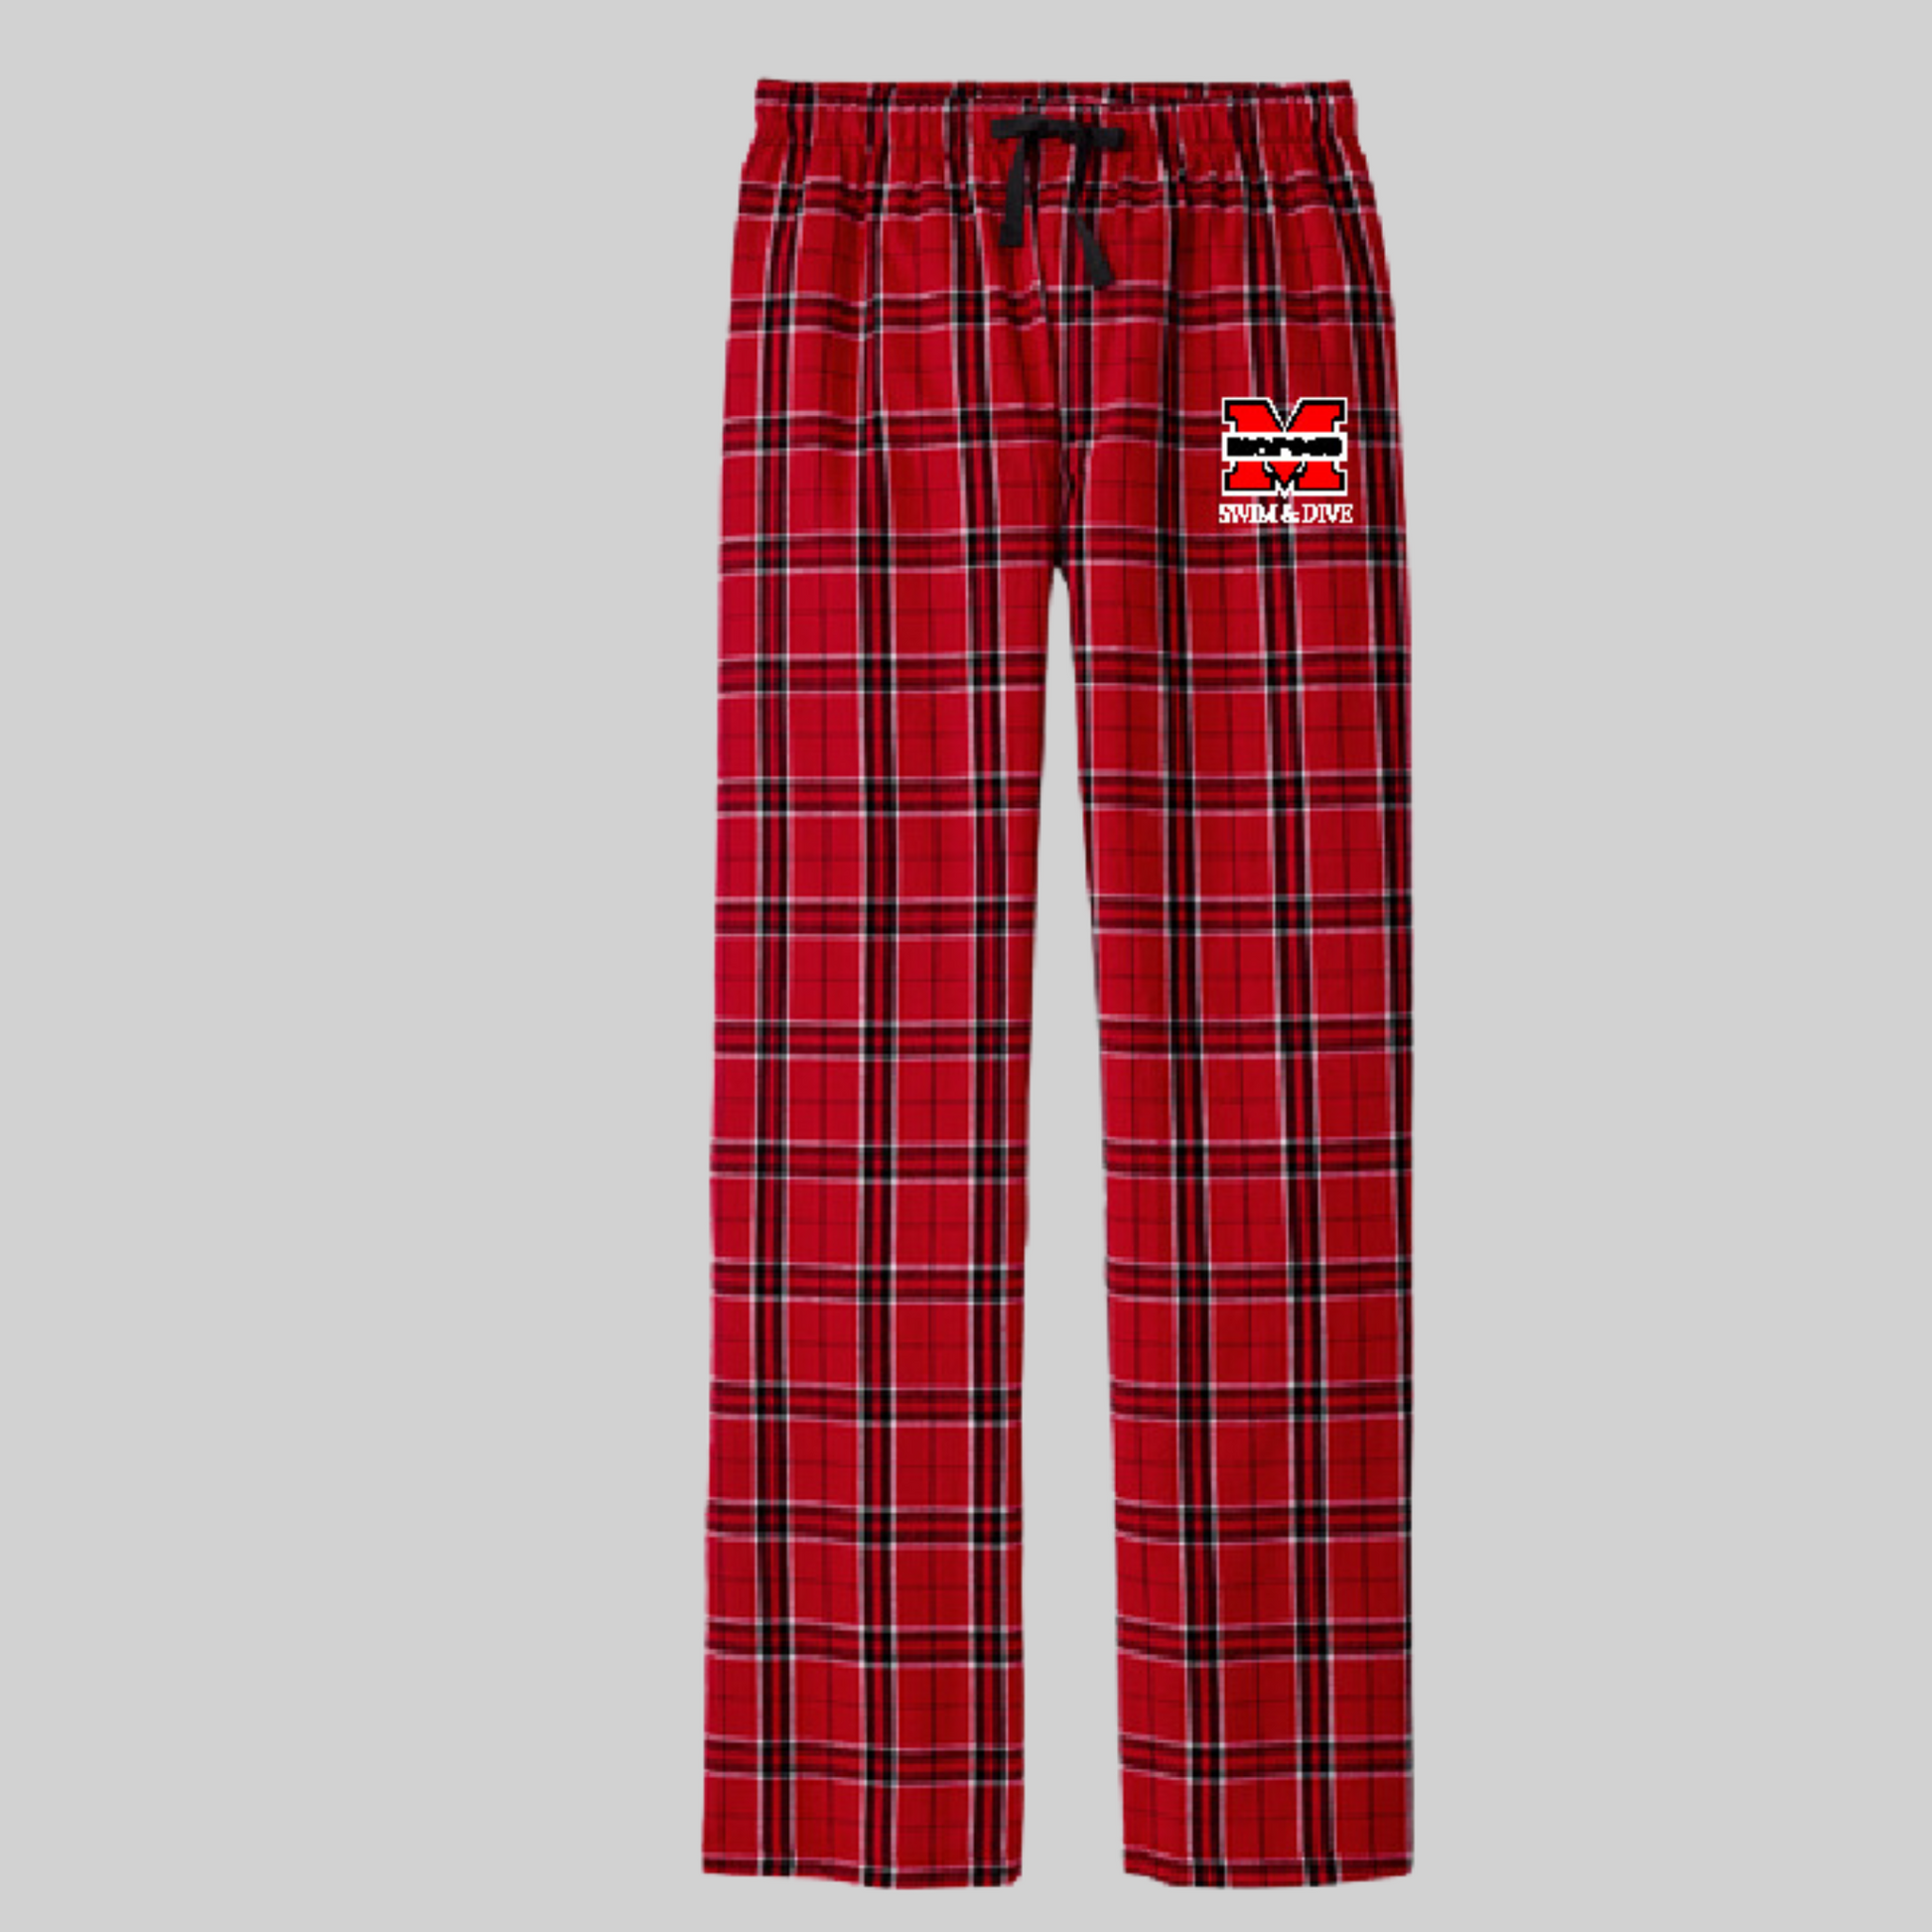 Blackberry Plaid Flannel Button-Front Pajamas